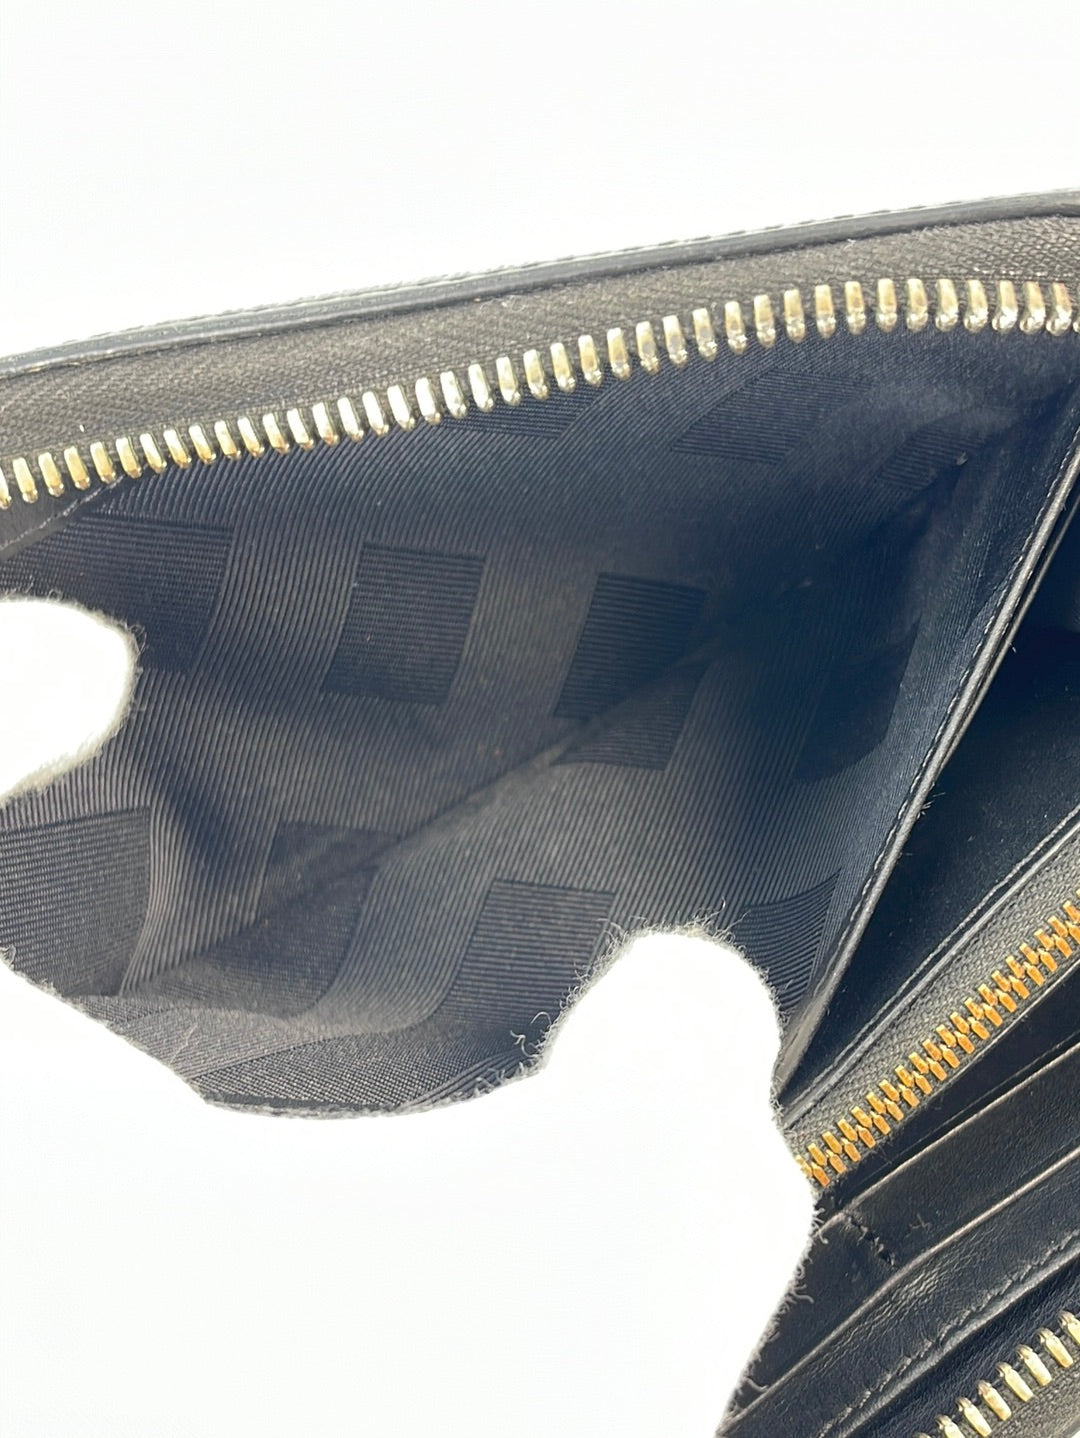 Preloved BURBERRY Black Leather Long Wallet QV6JMHQ 013023